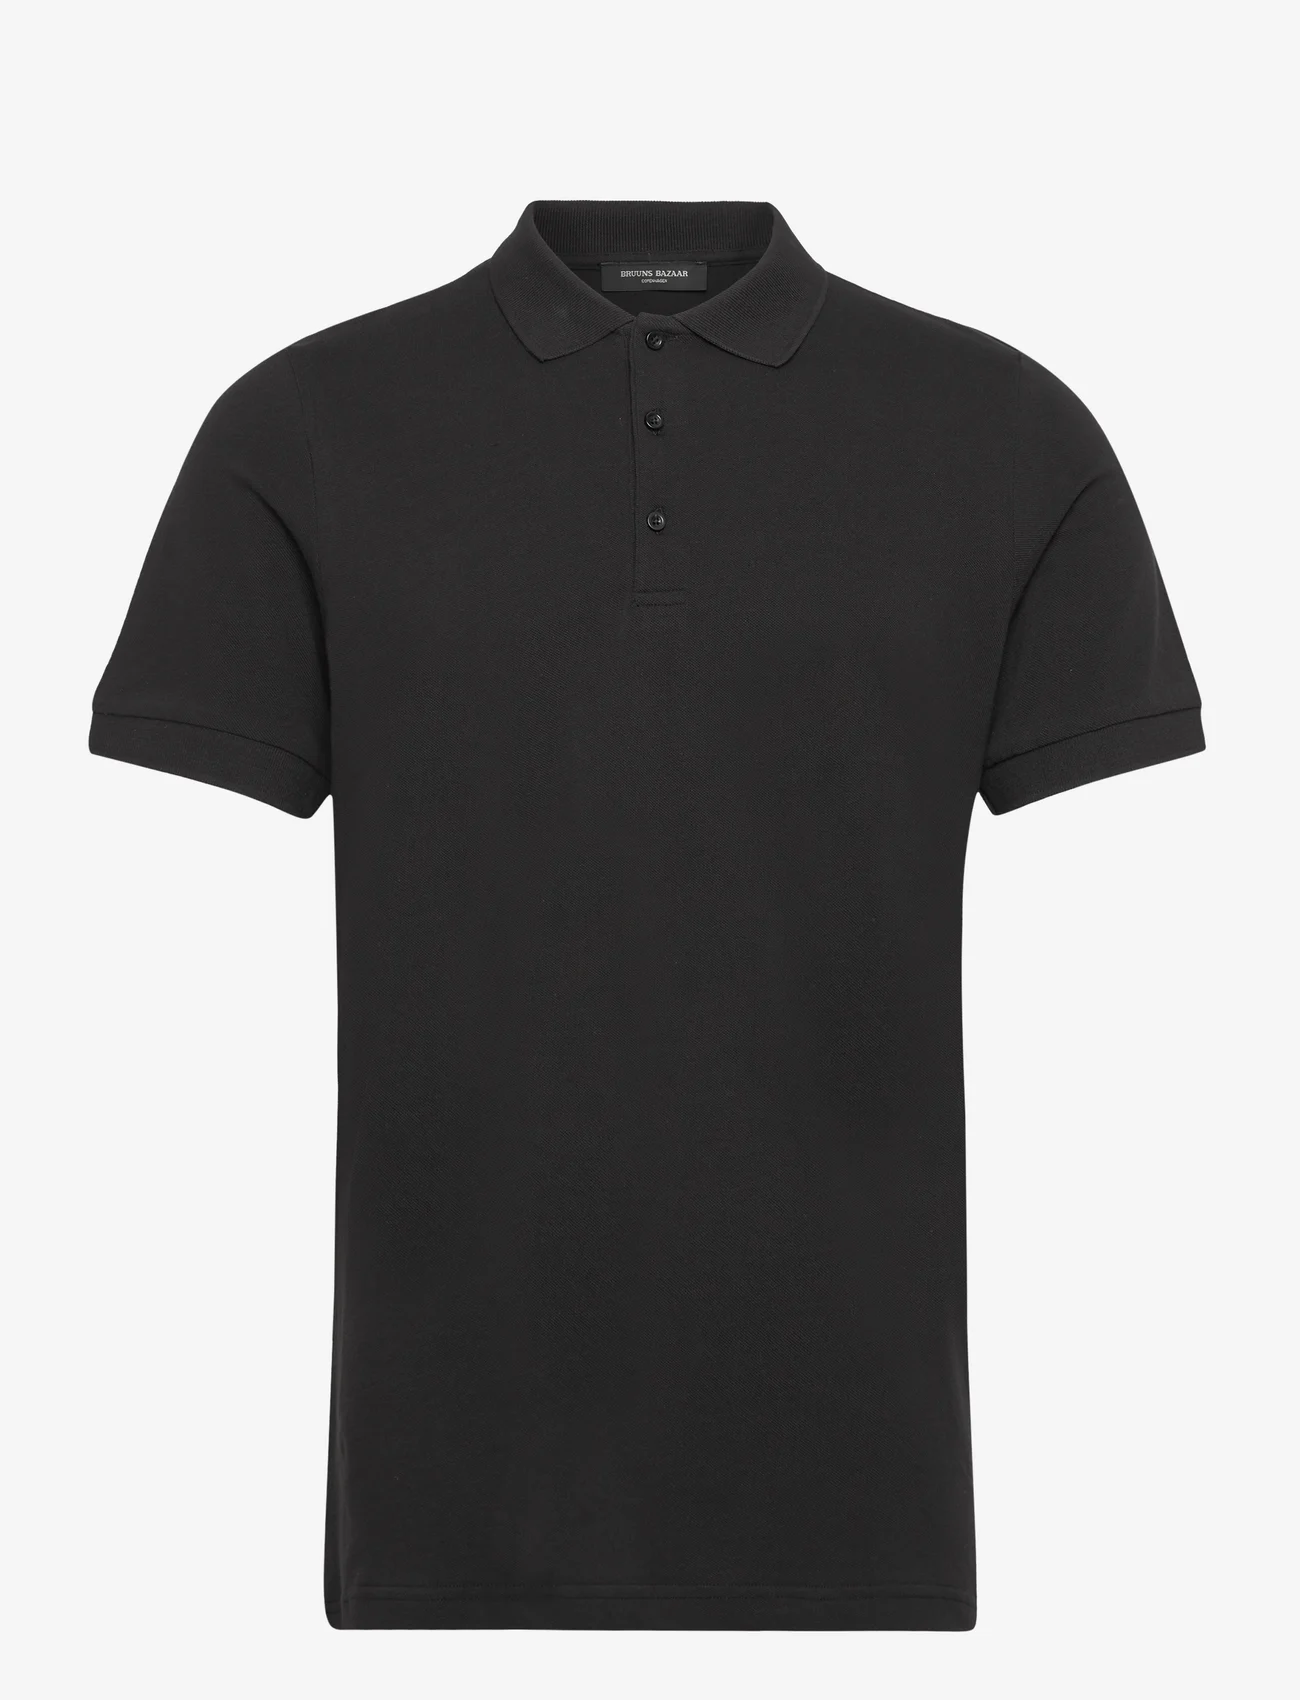 Bruuns Bazaar - Raul Gonzales polo shirt - short-sleeved polos - black1 - 0